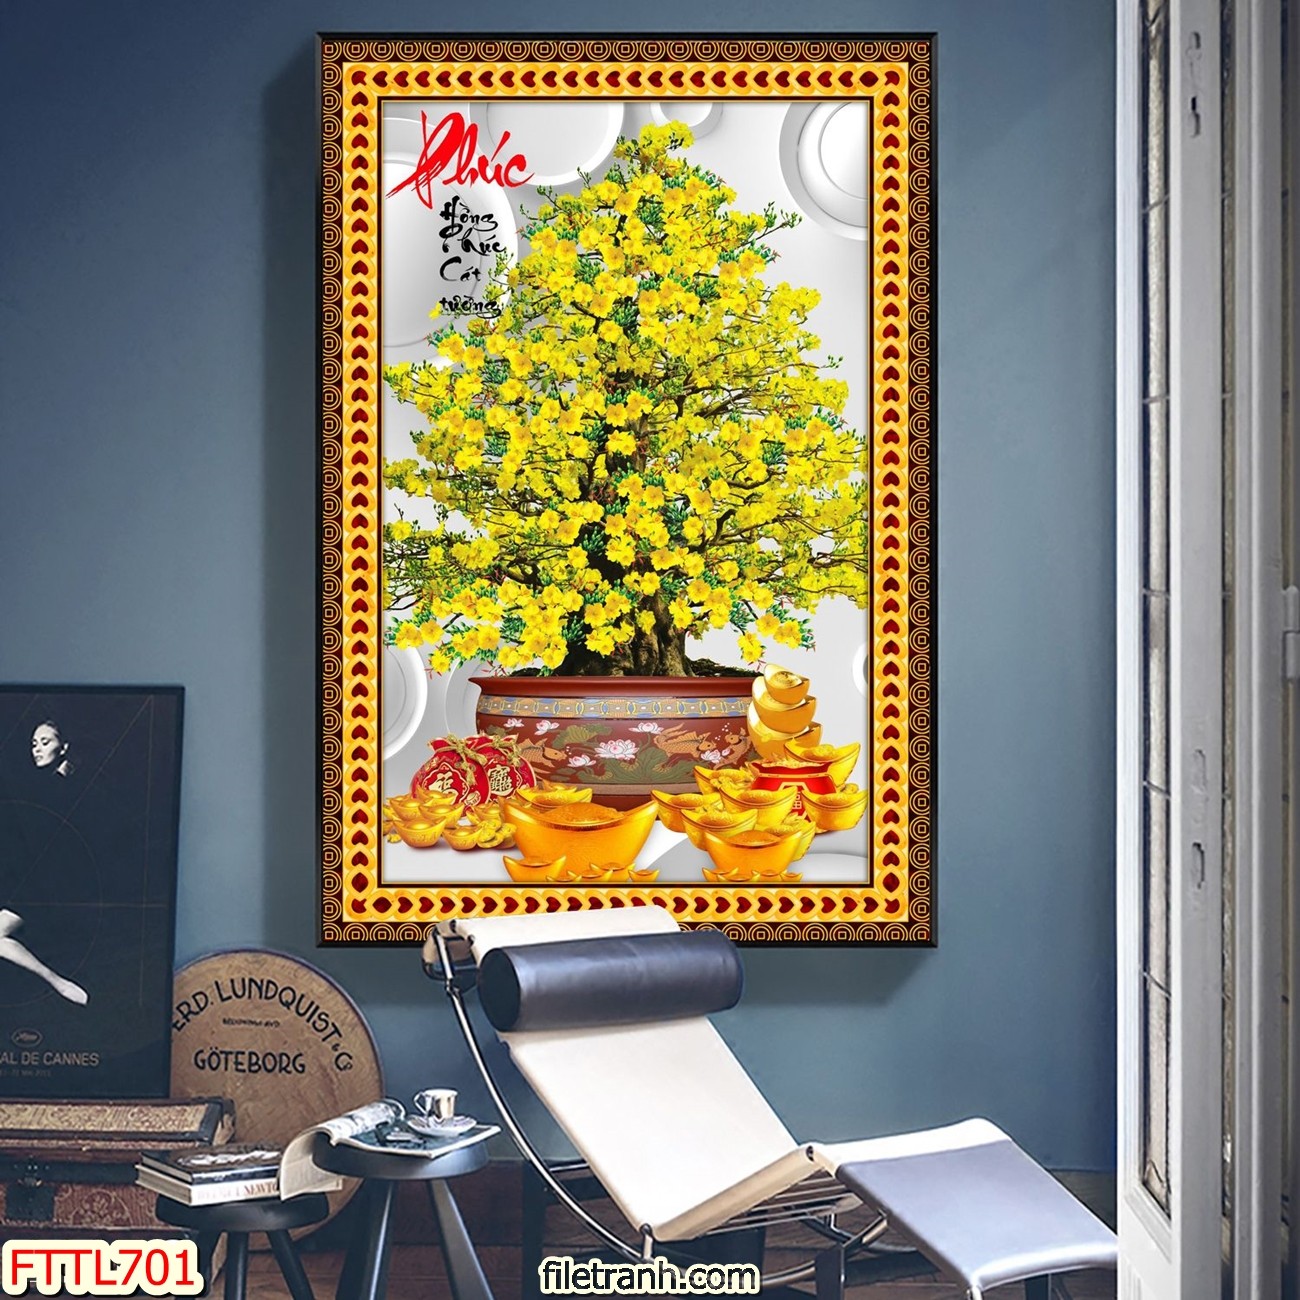 https://filetranh.com/file-tranh-chau-mai-bonsai/file-tranh-chau-mai-bonsai-fttl701.html